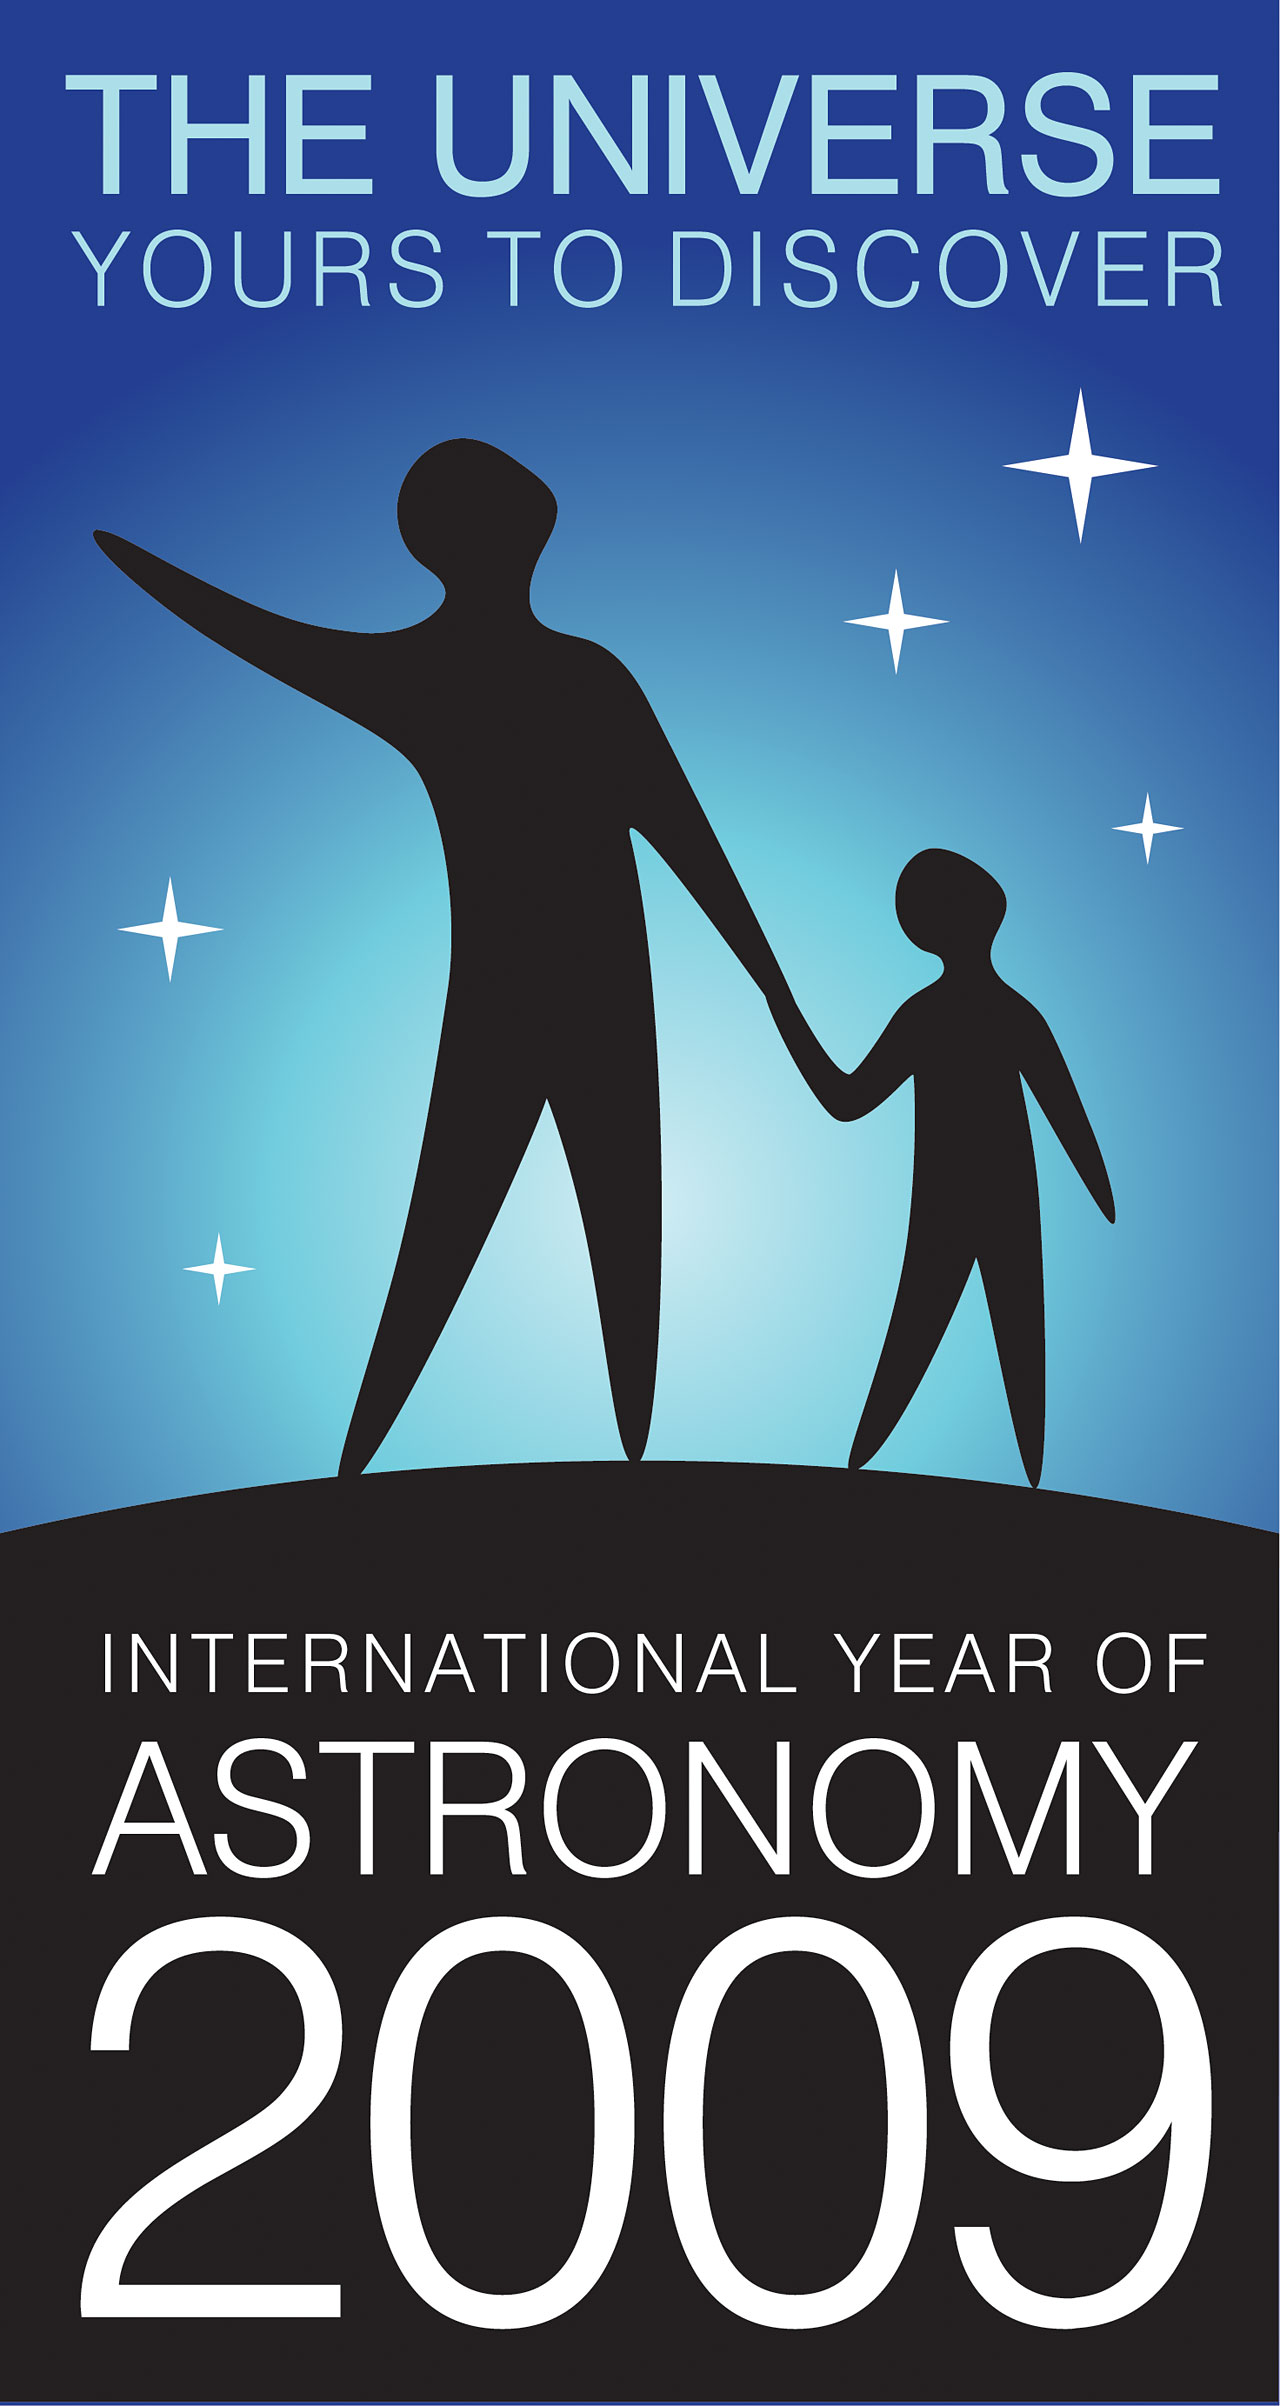 INTERNATIONAL YEAR OF ASTRONOMY!